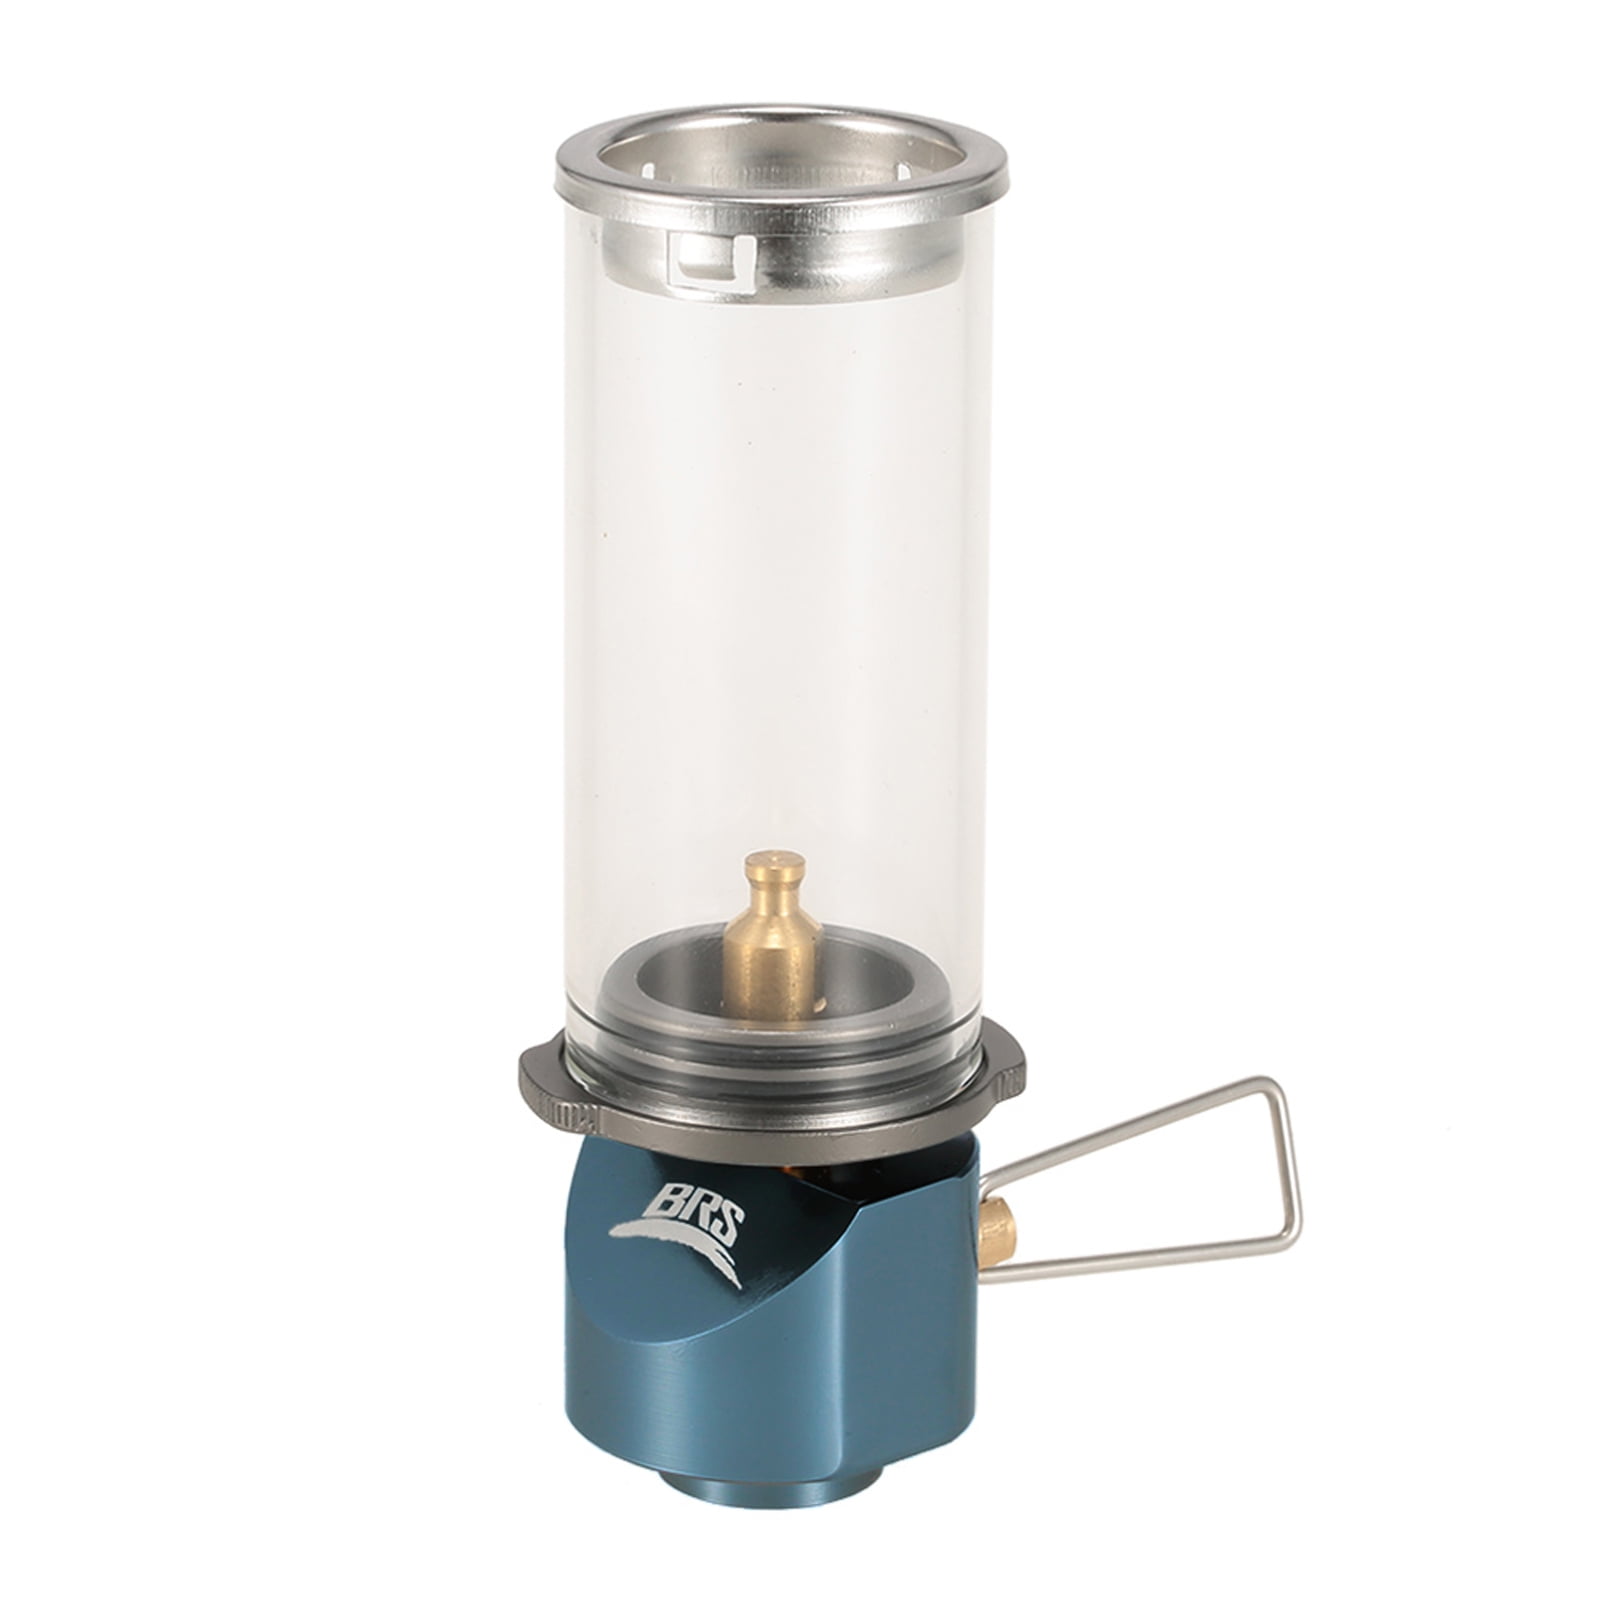 BRS-21 Mini Gas lantern Outdoor Butane Gas Camping Lamp Ultralight Portable 